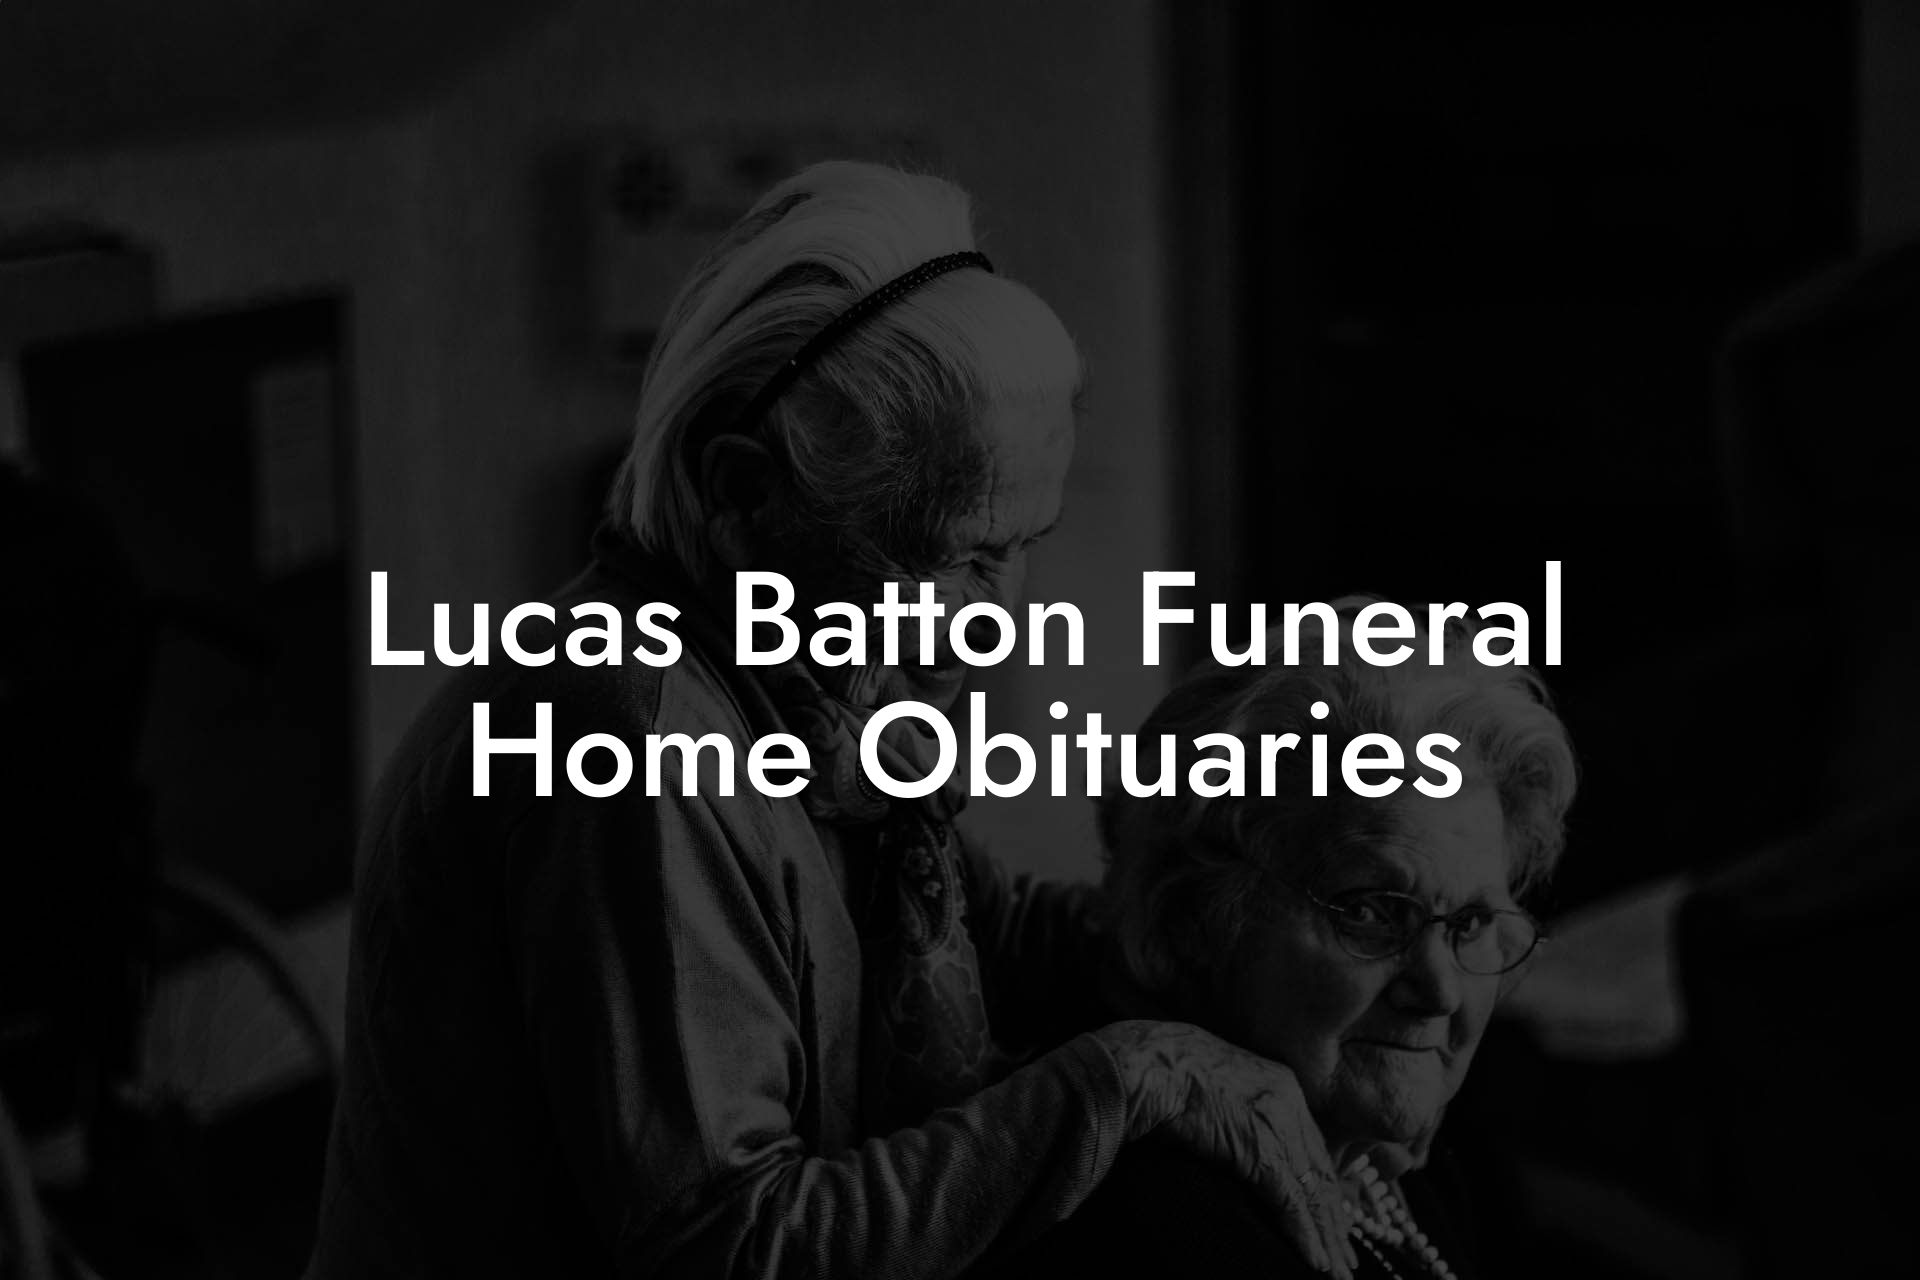 Lucas Batton Funeral Home Obituaries